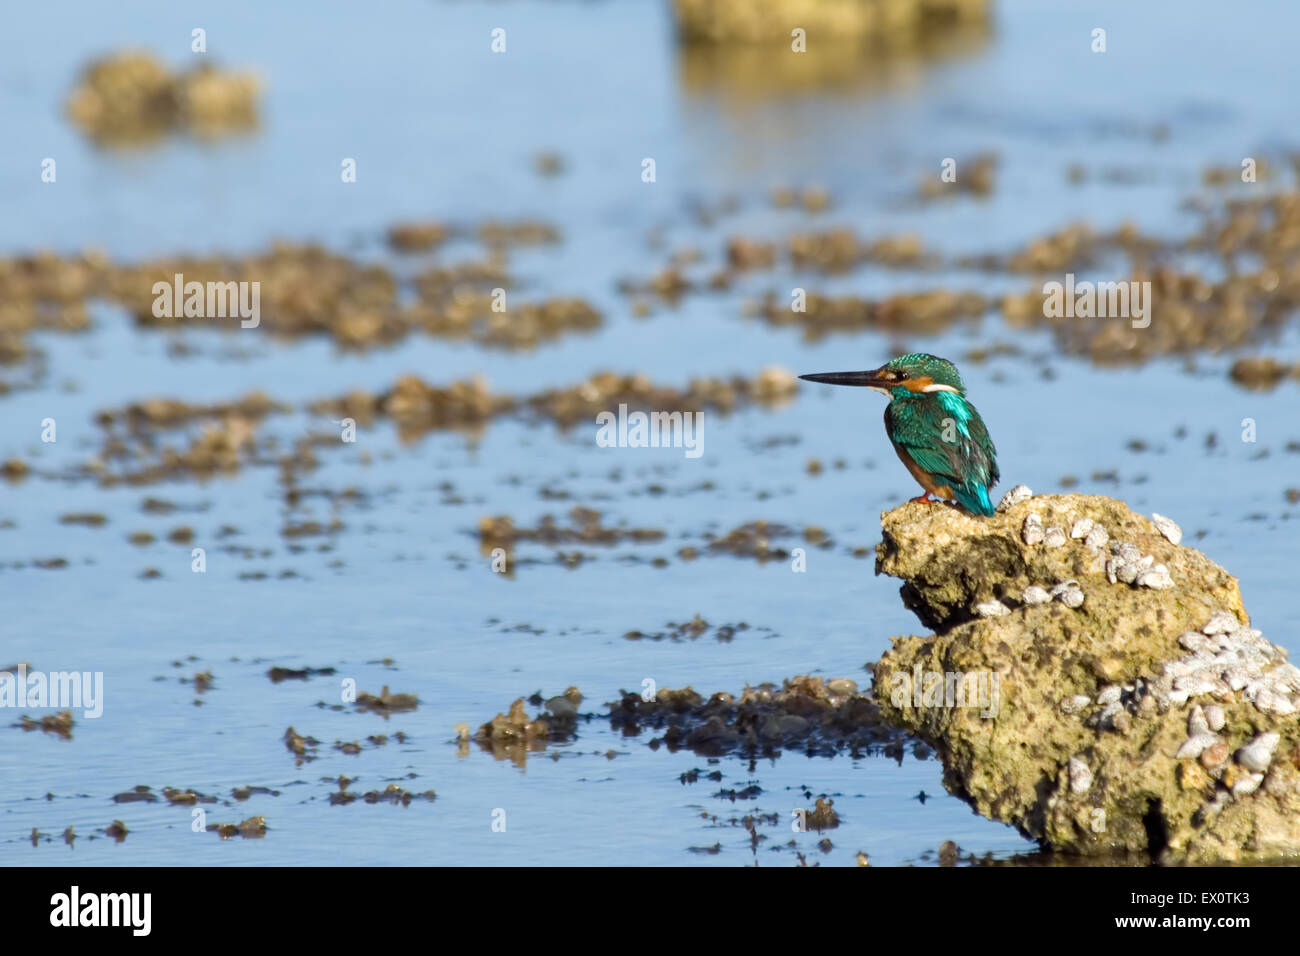 Emerald kingfisher at Red Sea beach Stock Photo